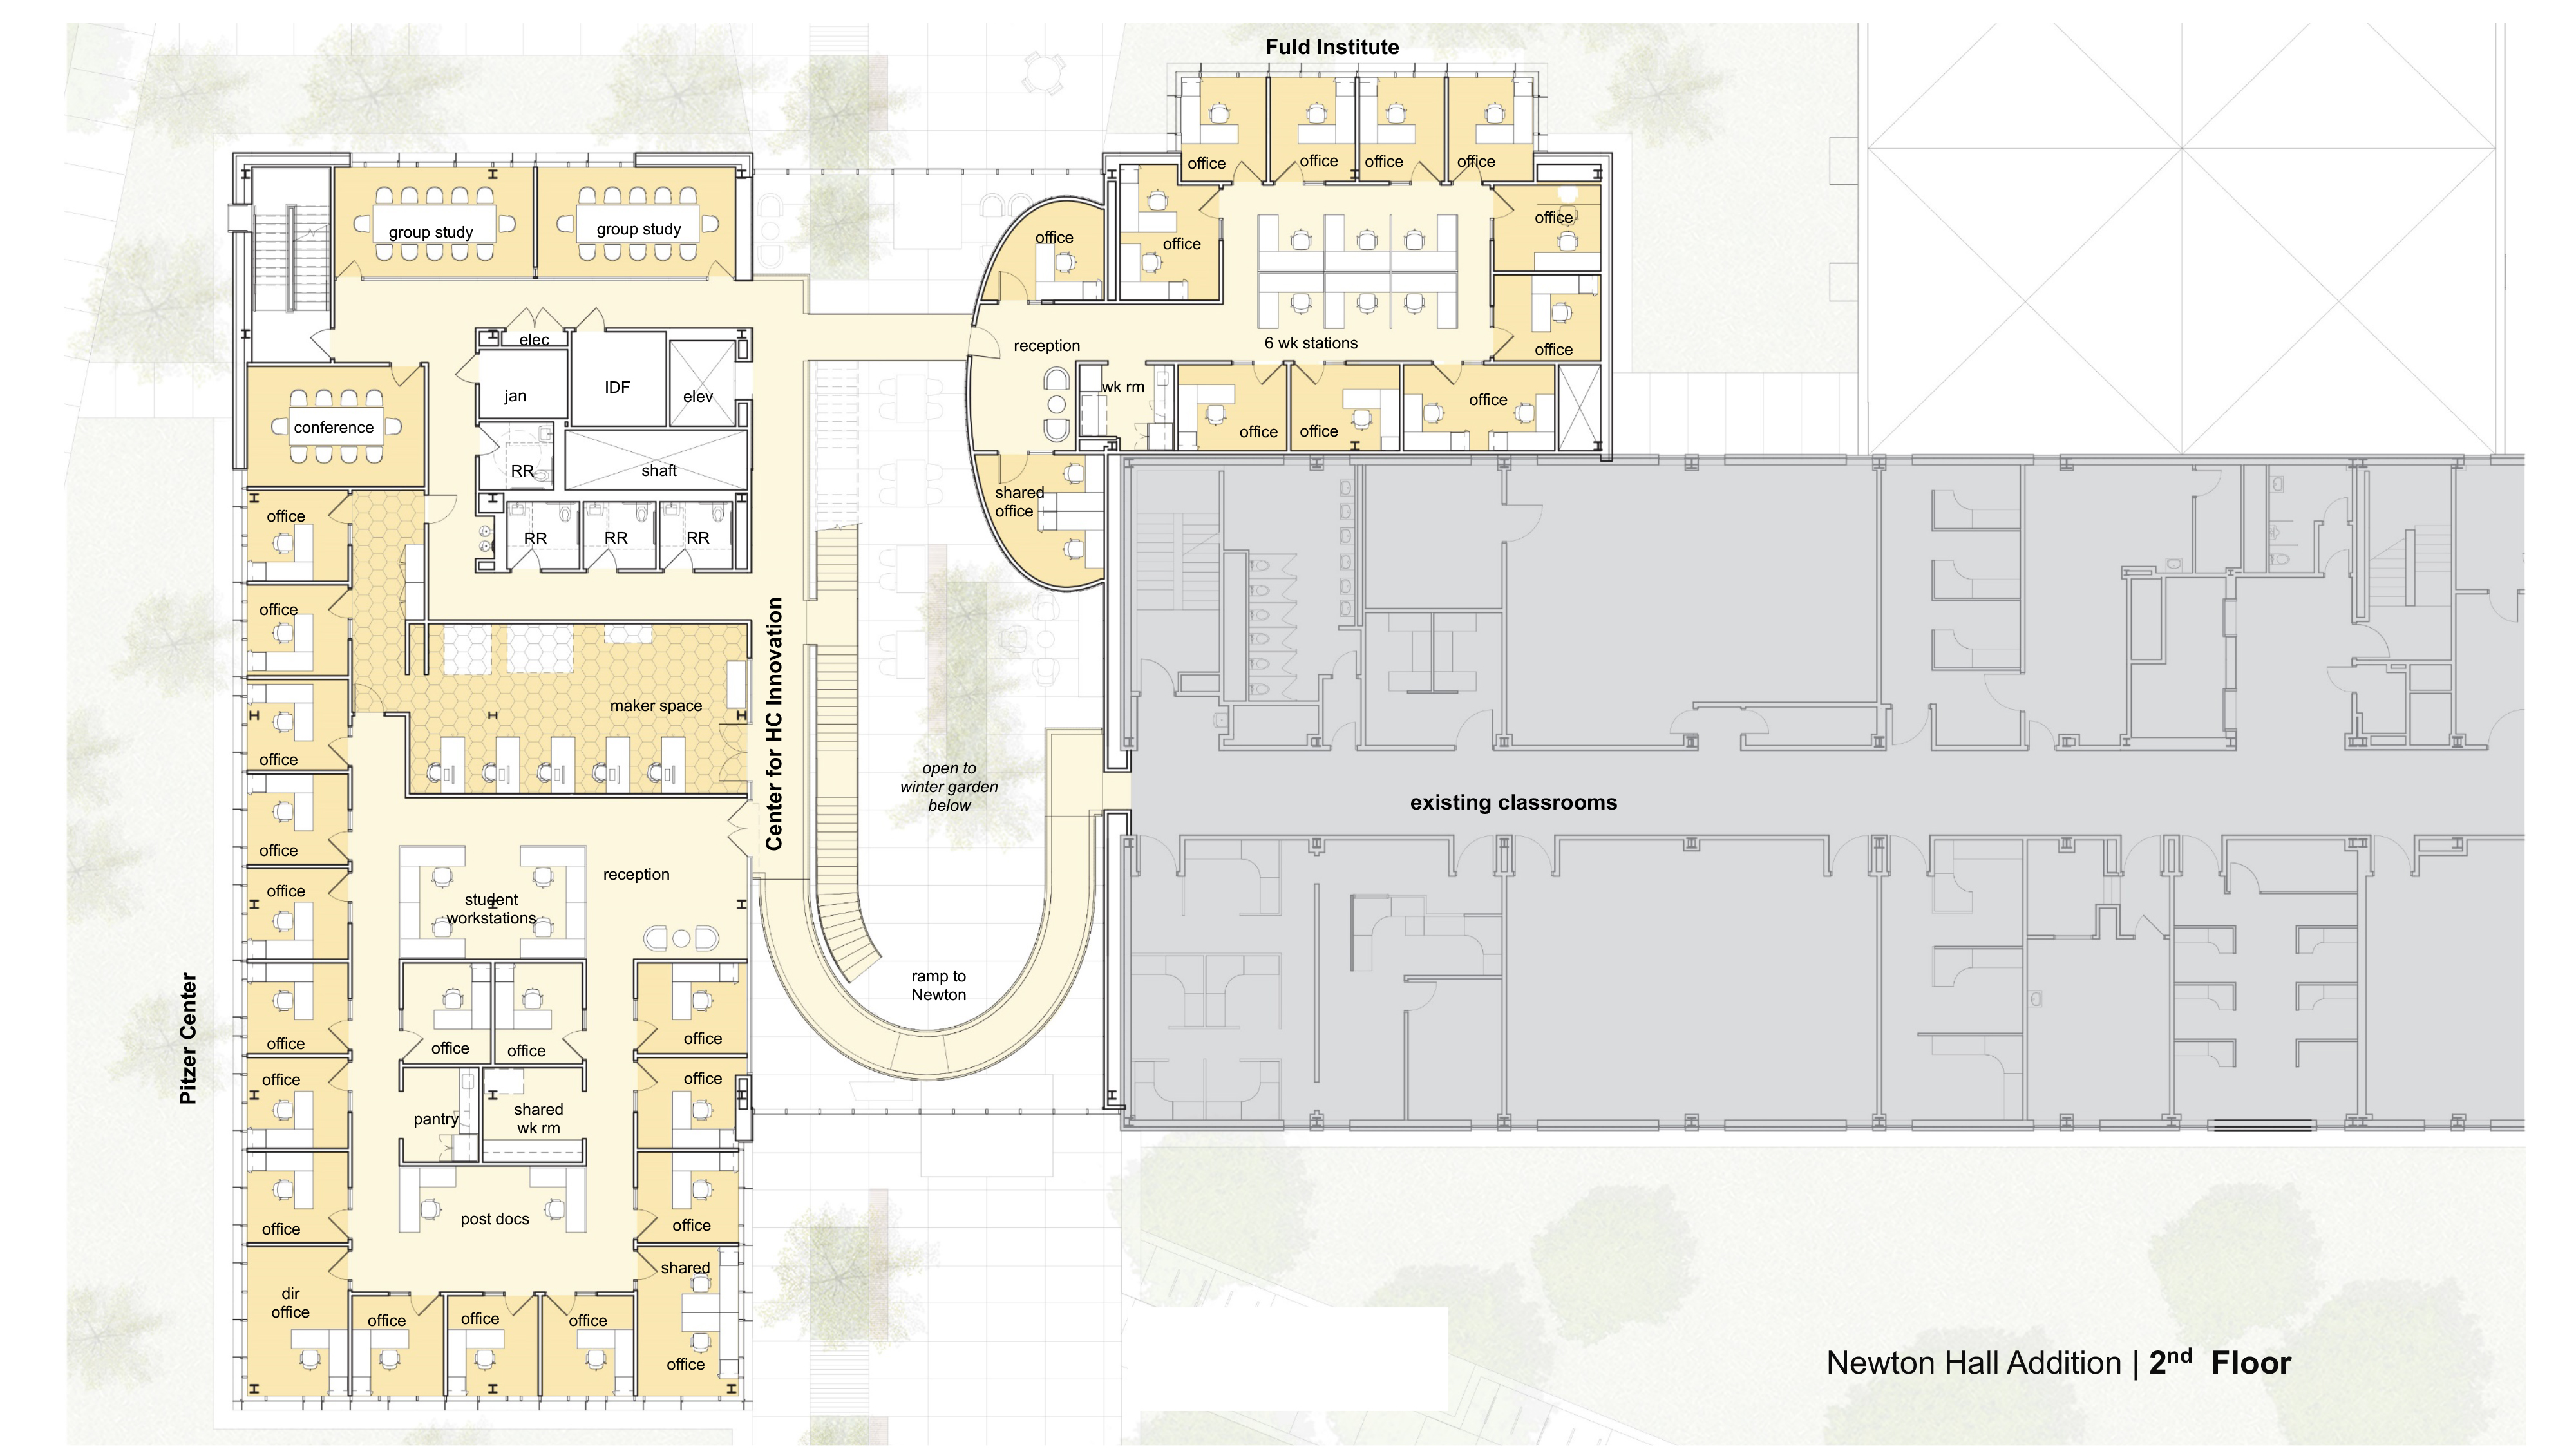 Second floor plan of Newton Hall addition